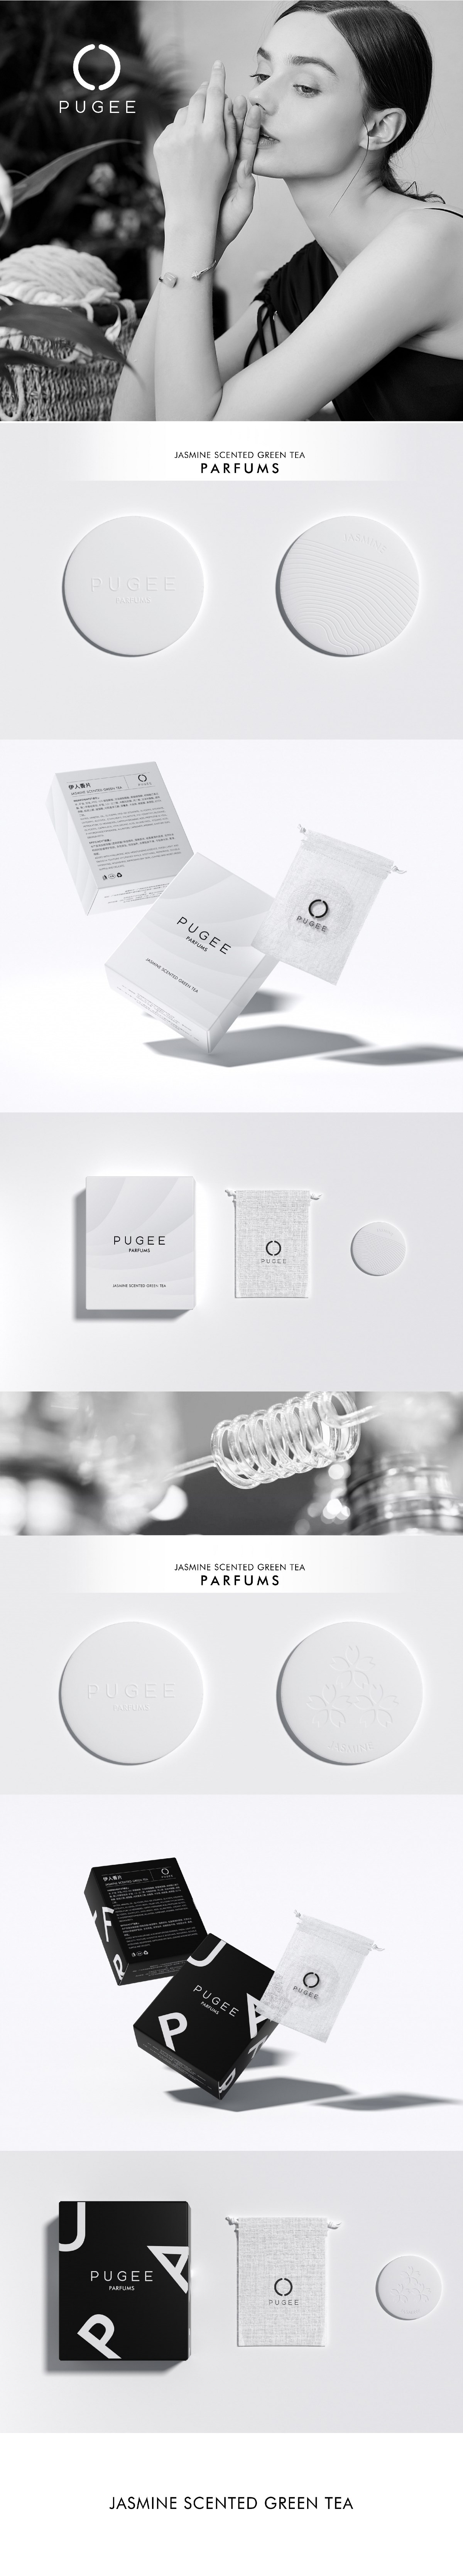 PUGEE-伊人香片包装设计分享08 ● 从不营销